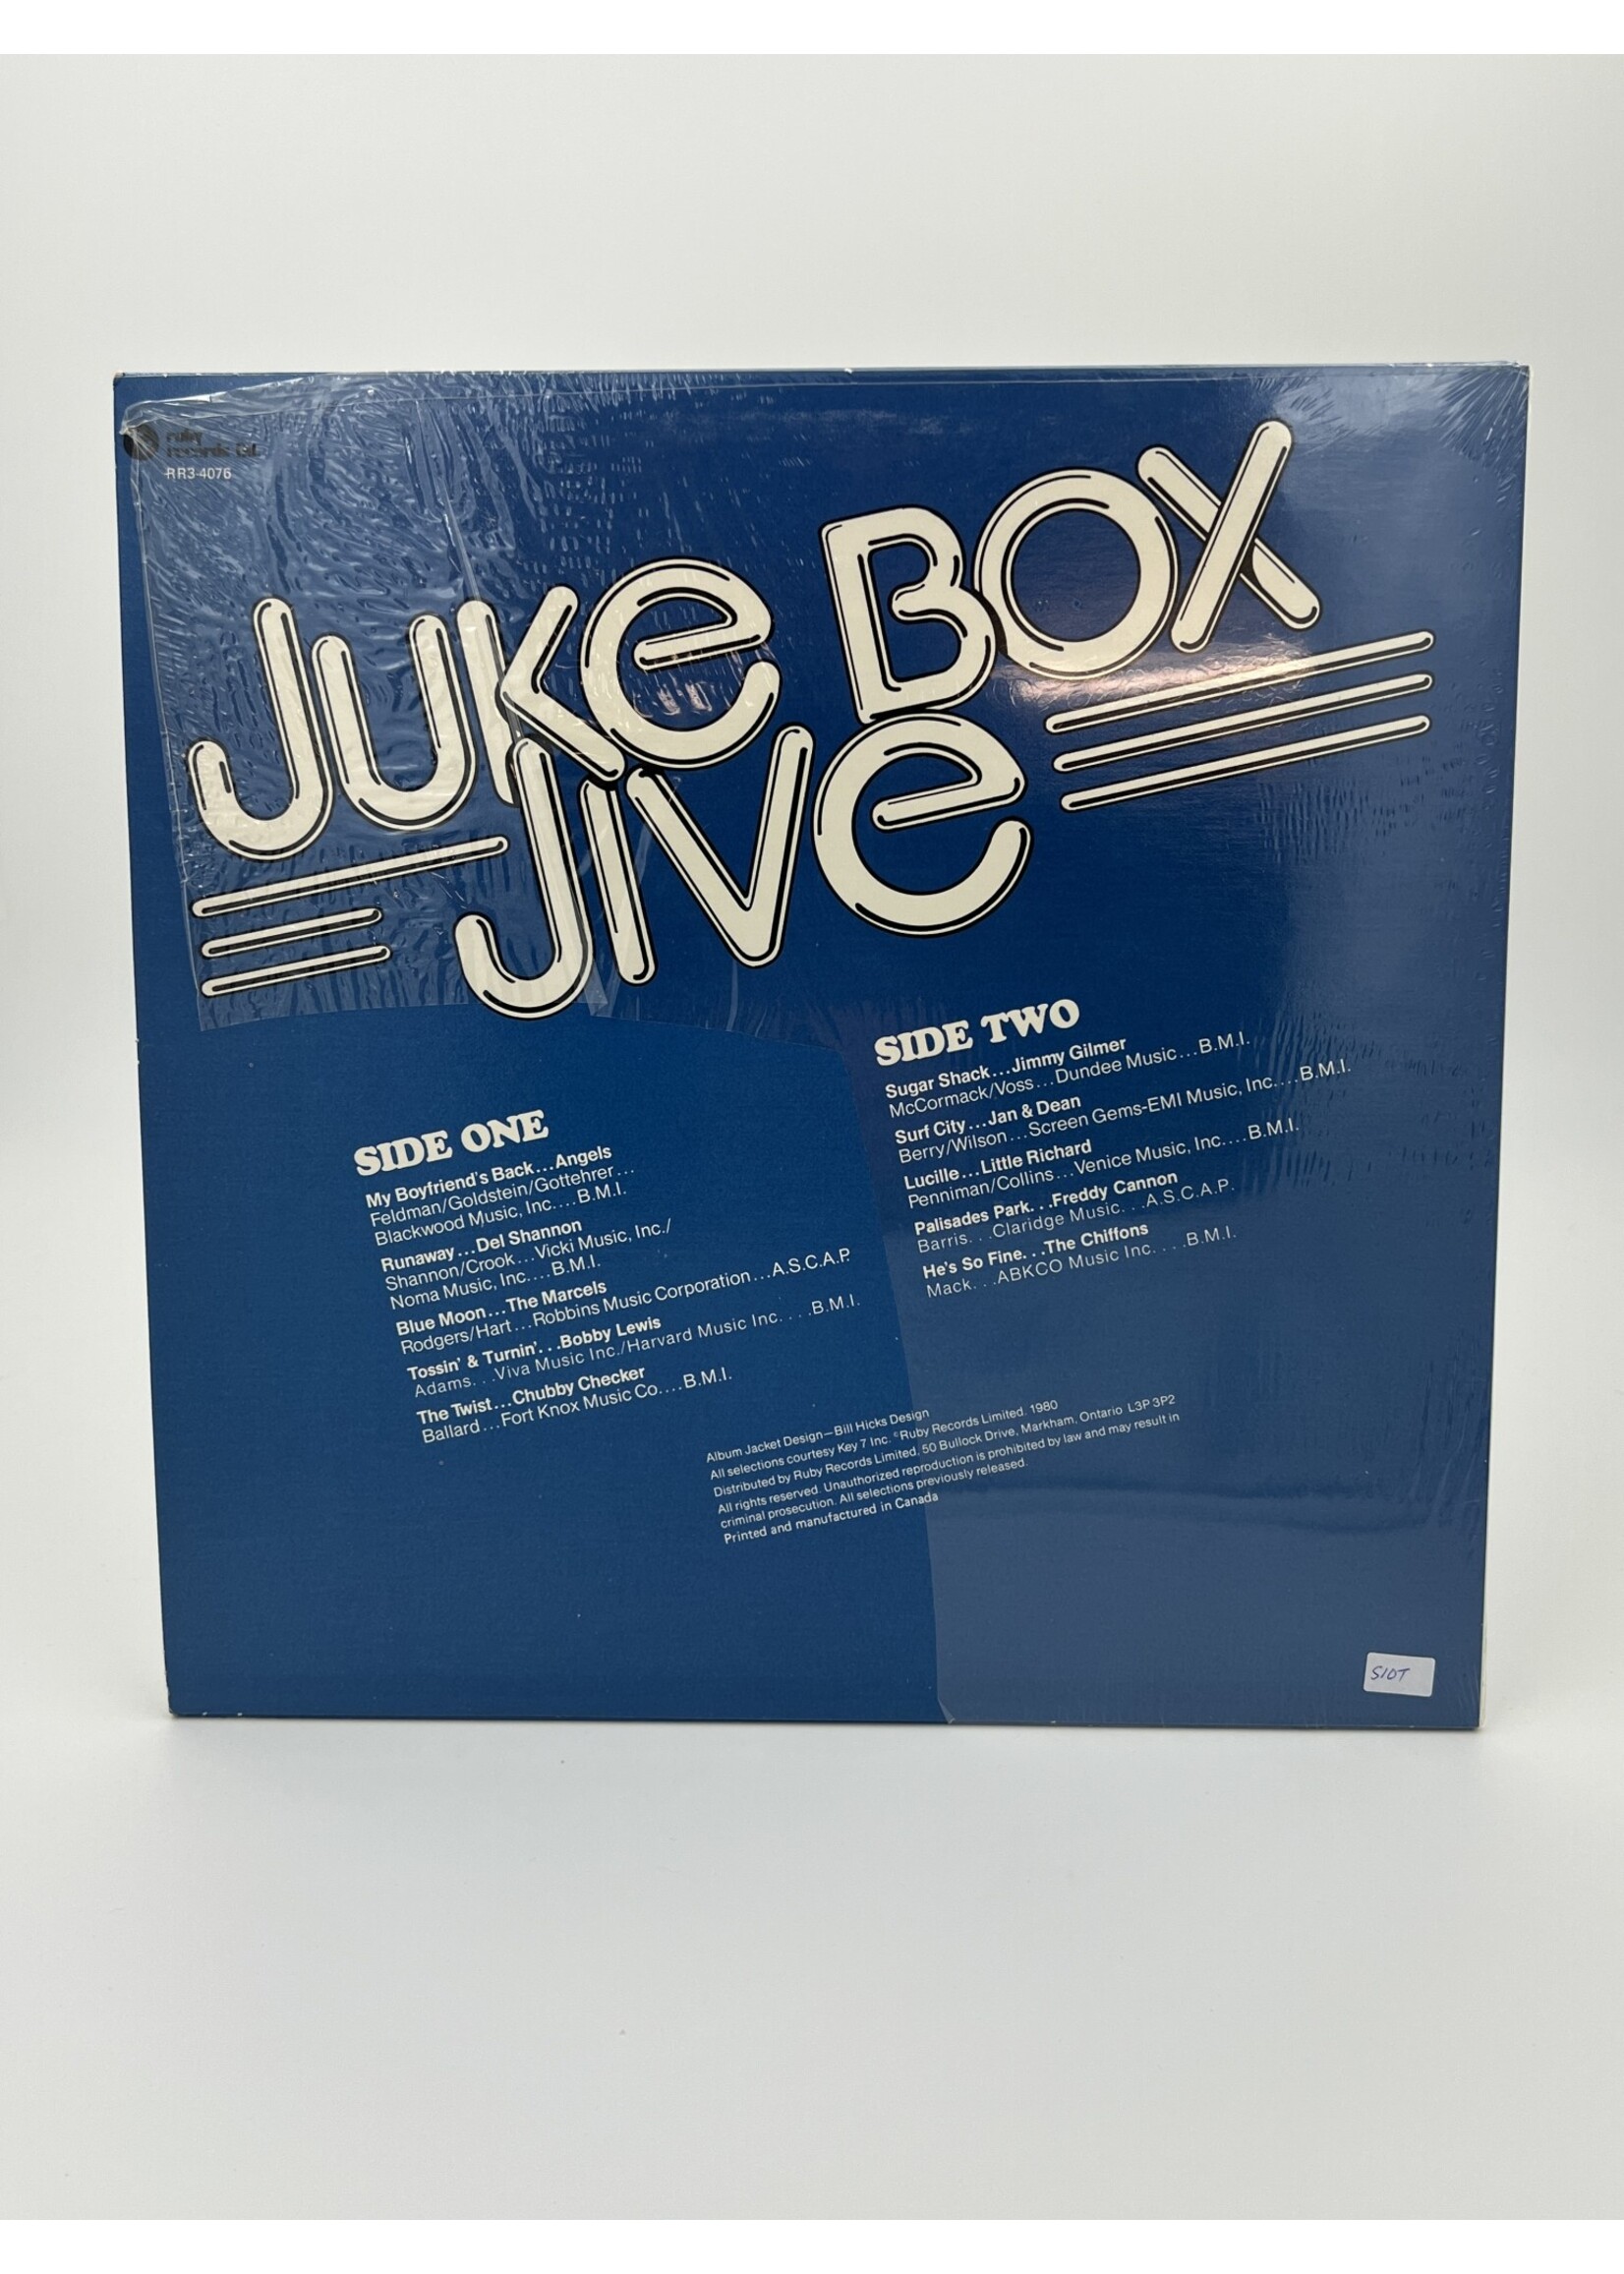 LP   Juke Box Jive Original Artists LP Record